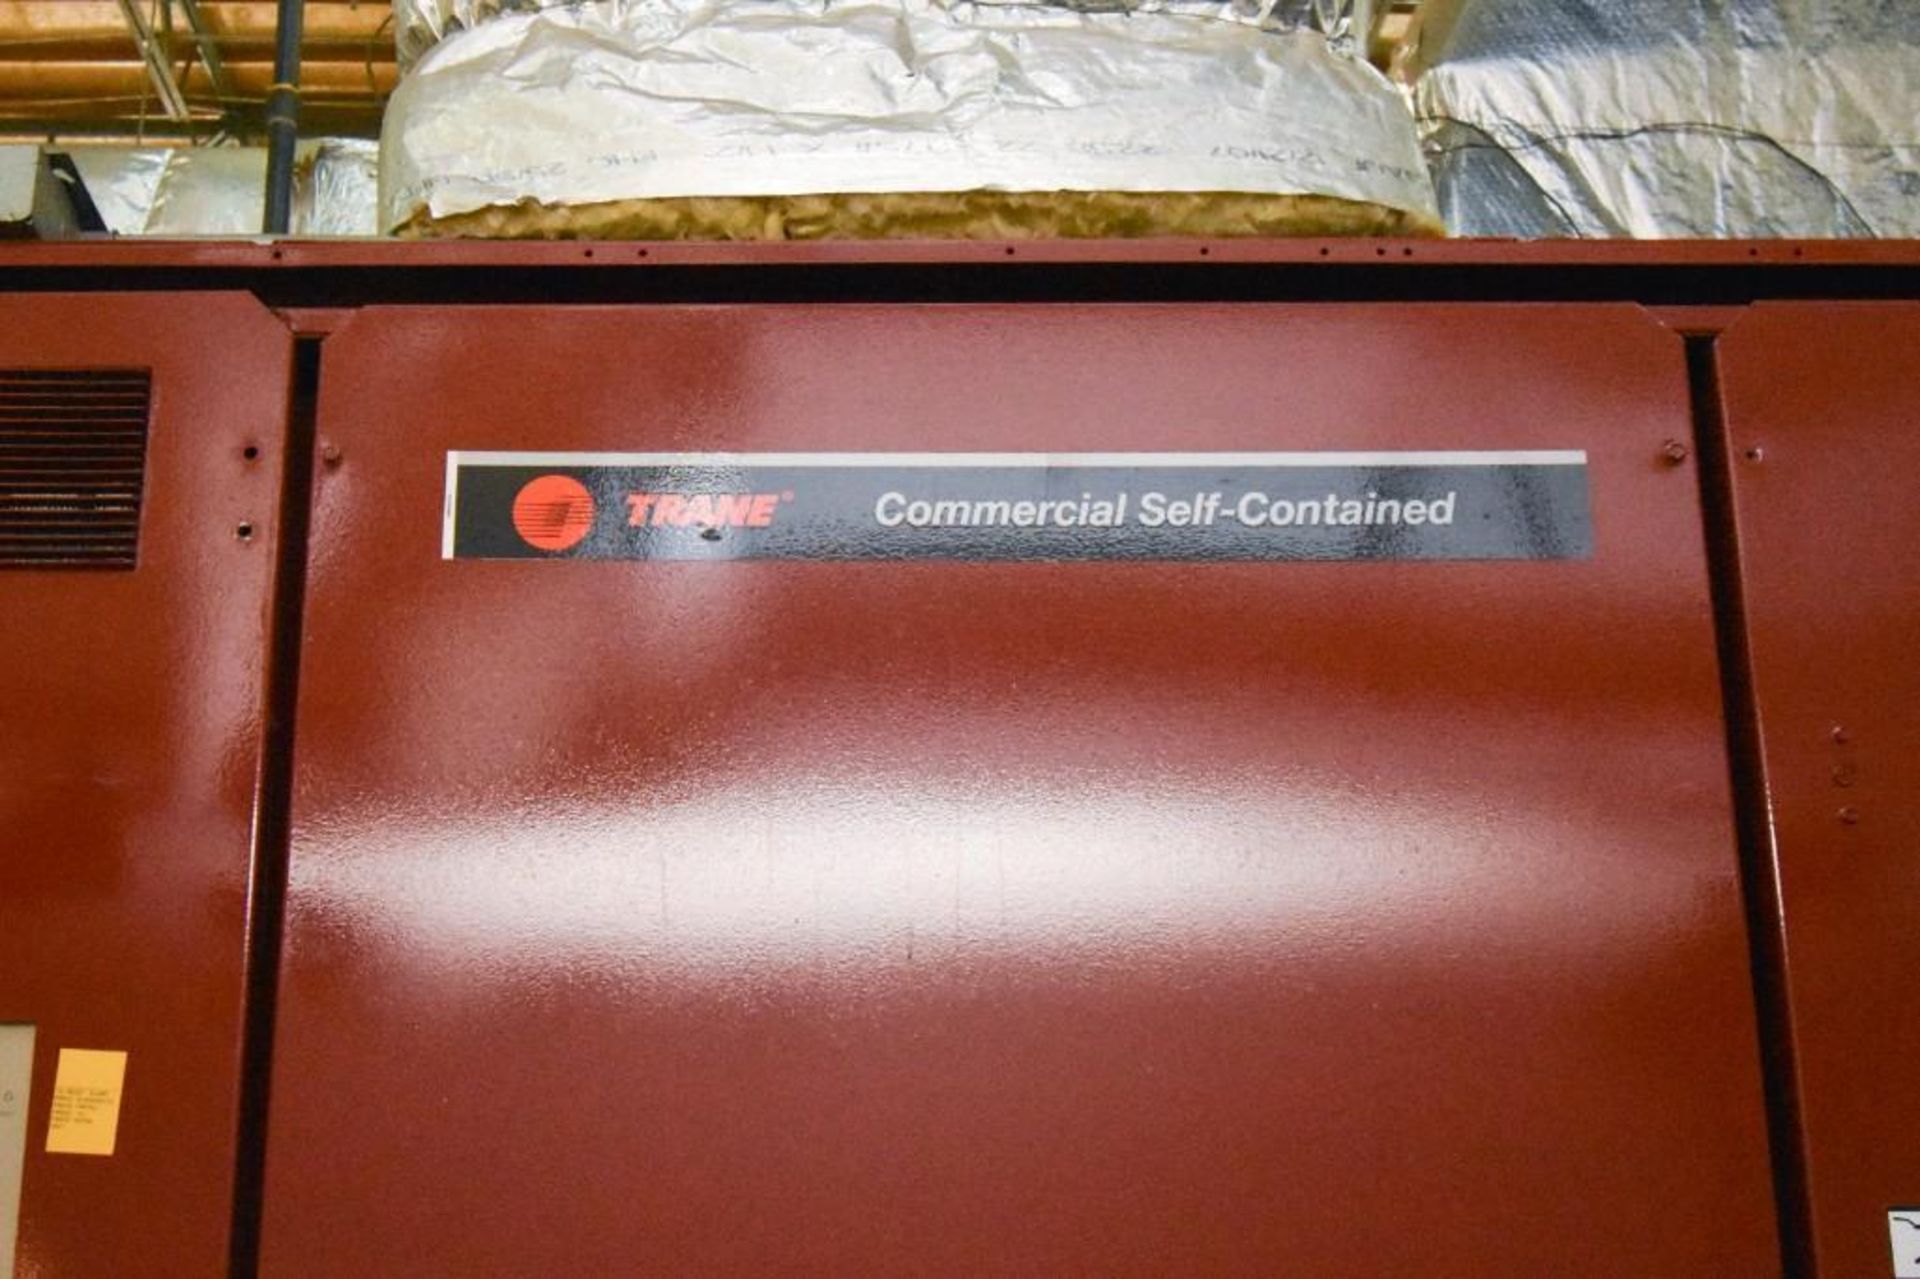 Trane Air Conditioner - Image 2 of 7